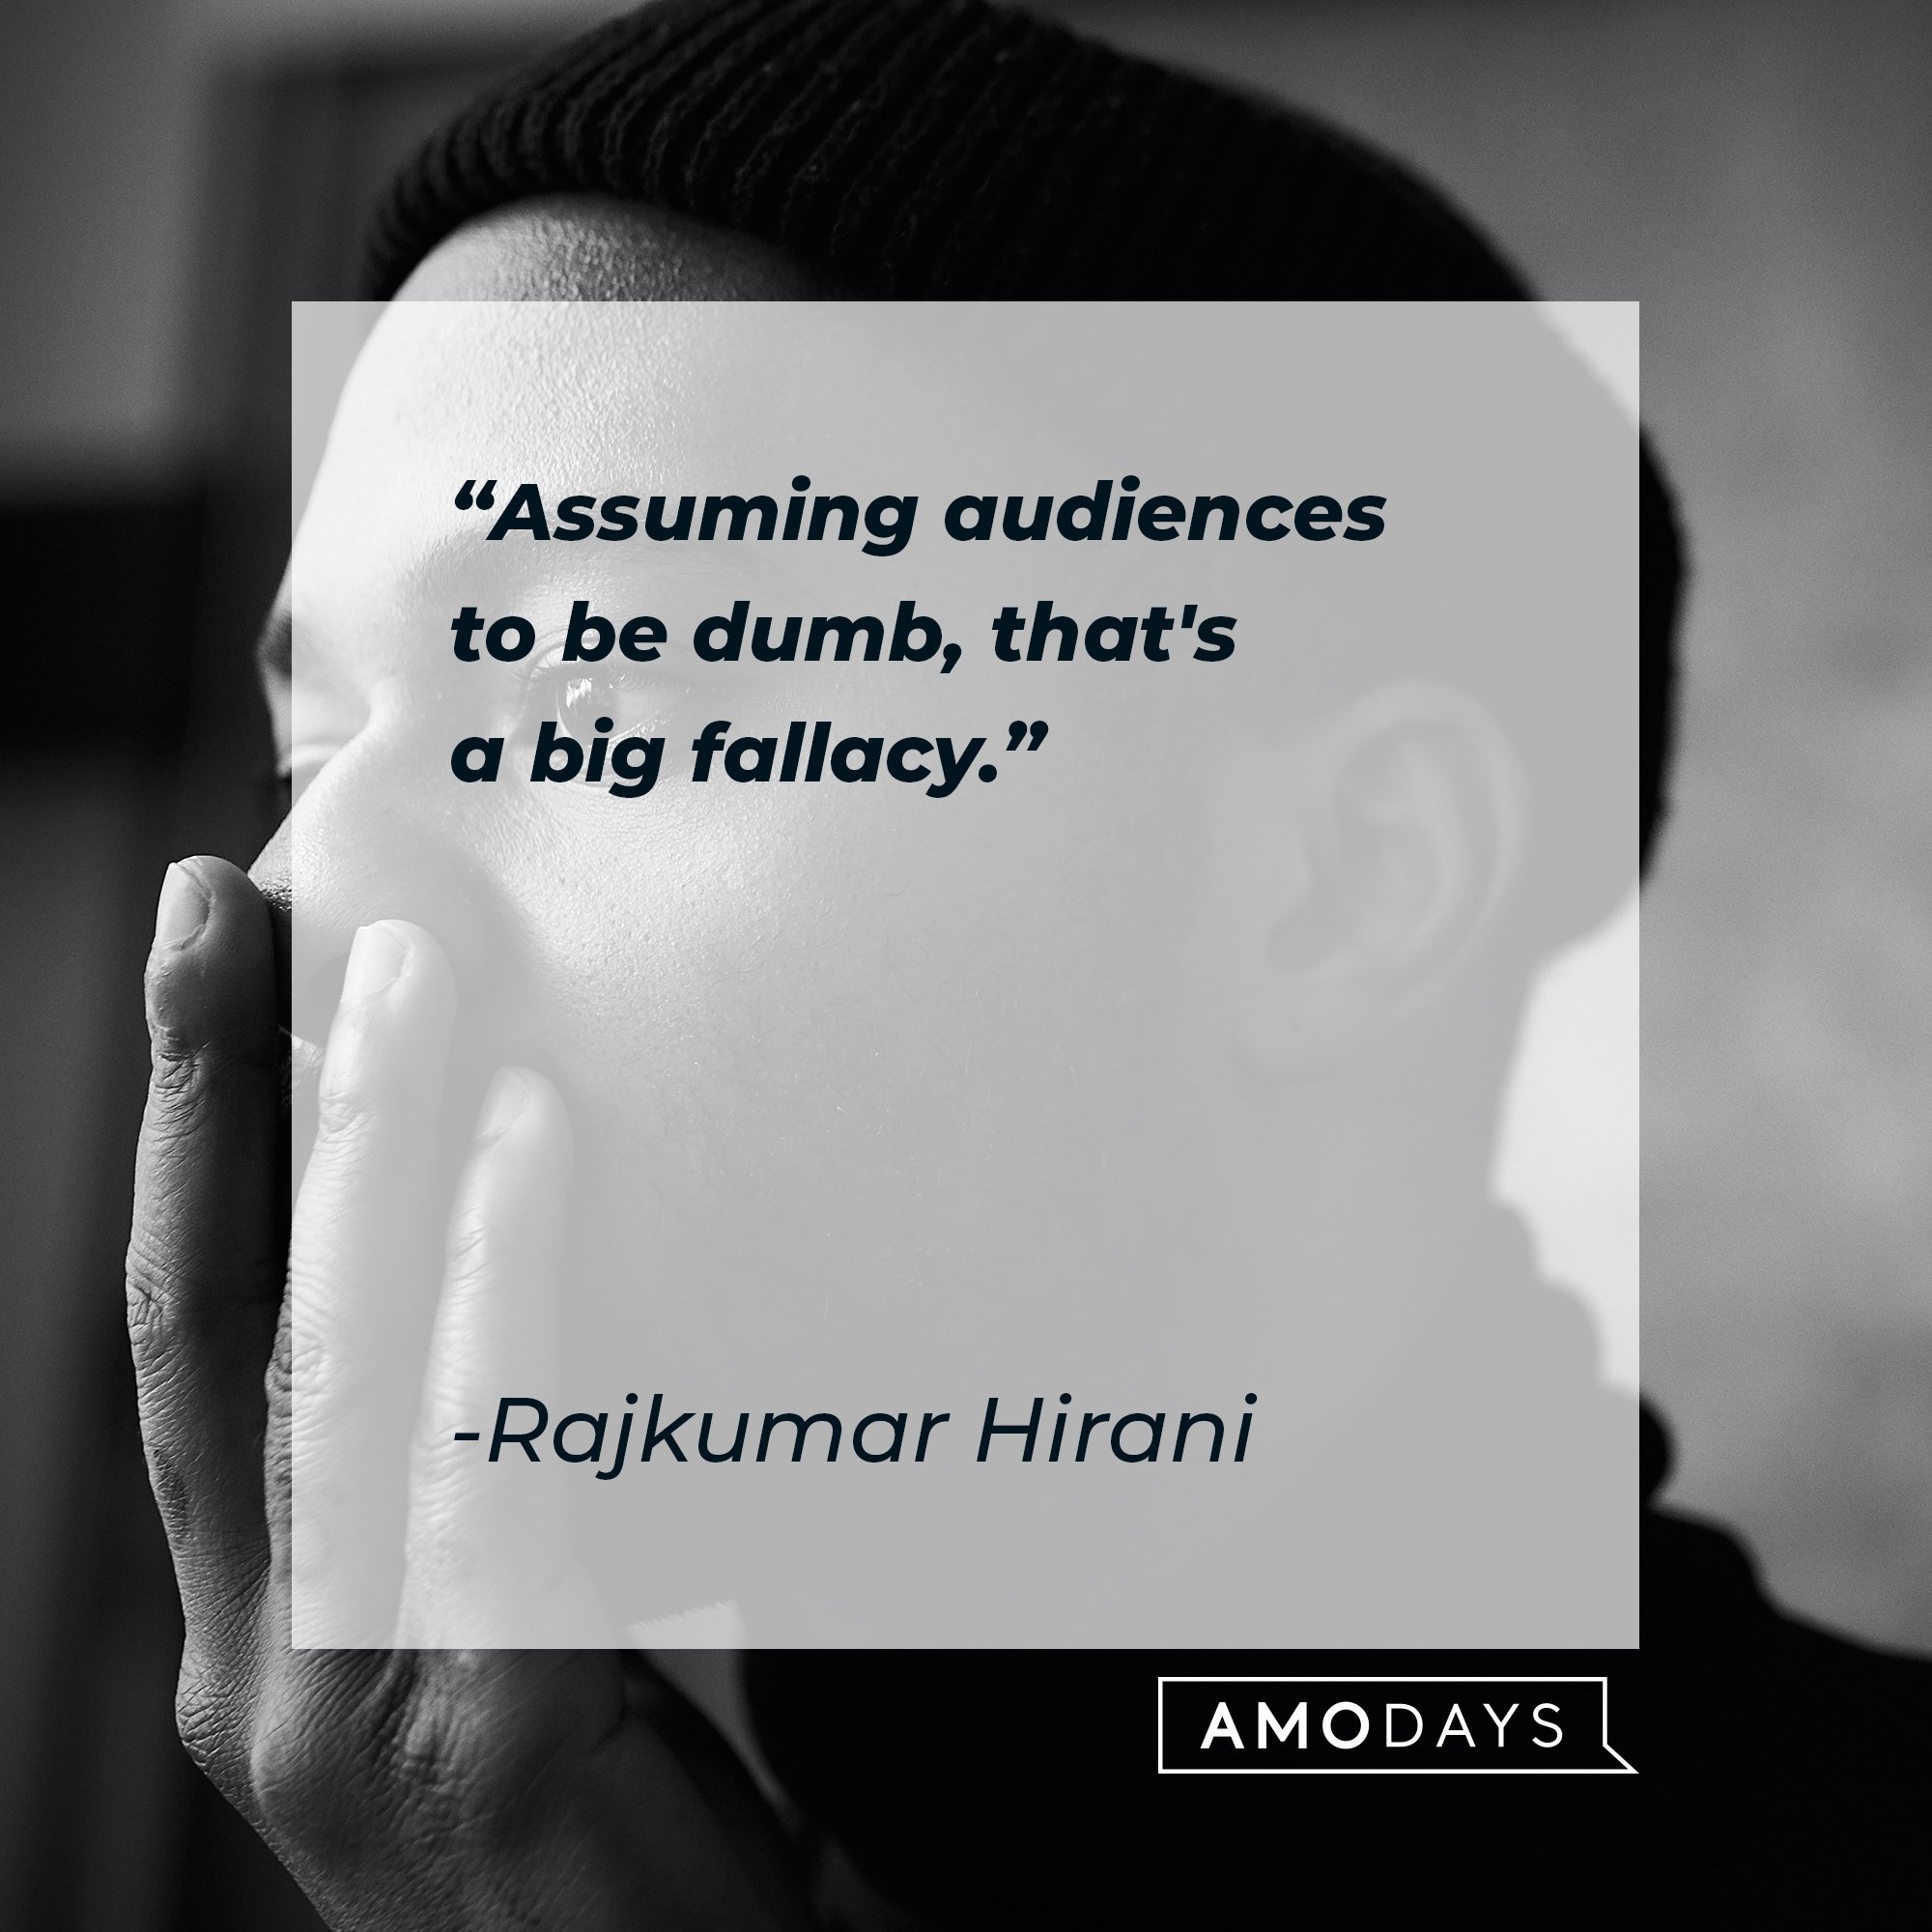 Rajkumar Hirani’s quote: "Assuming audiences to be dumb, that's a big fallacy." | Image: AmoDays 